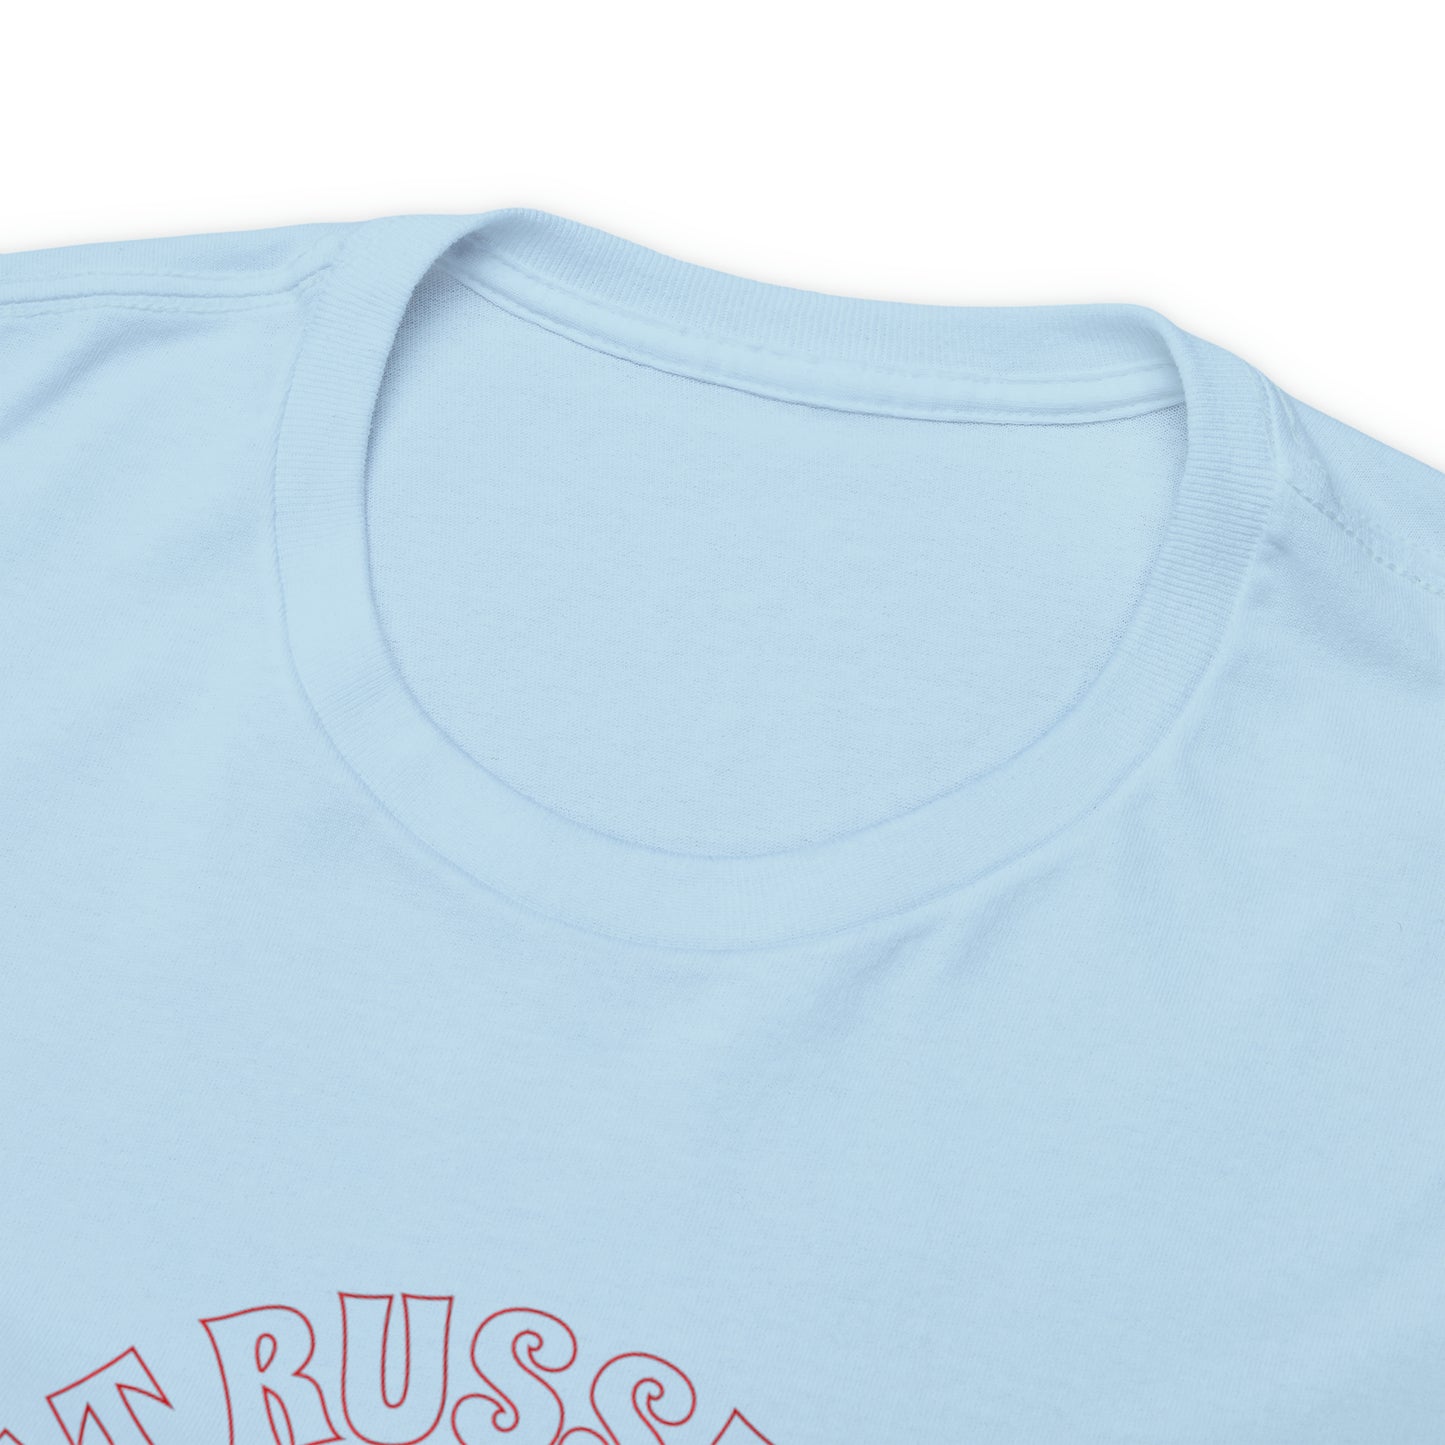 Fat Russell's Barklaggio Casino - English Bulldog T Shirt - Unisex Heavy Cotton Tee